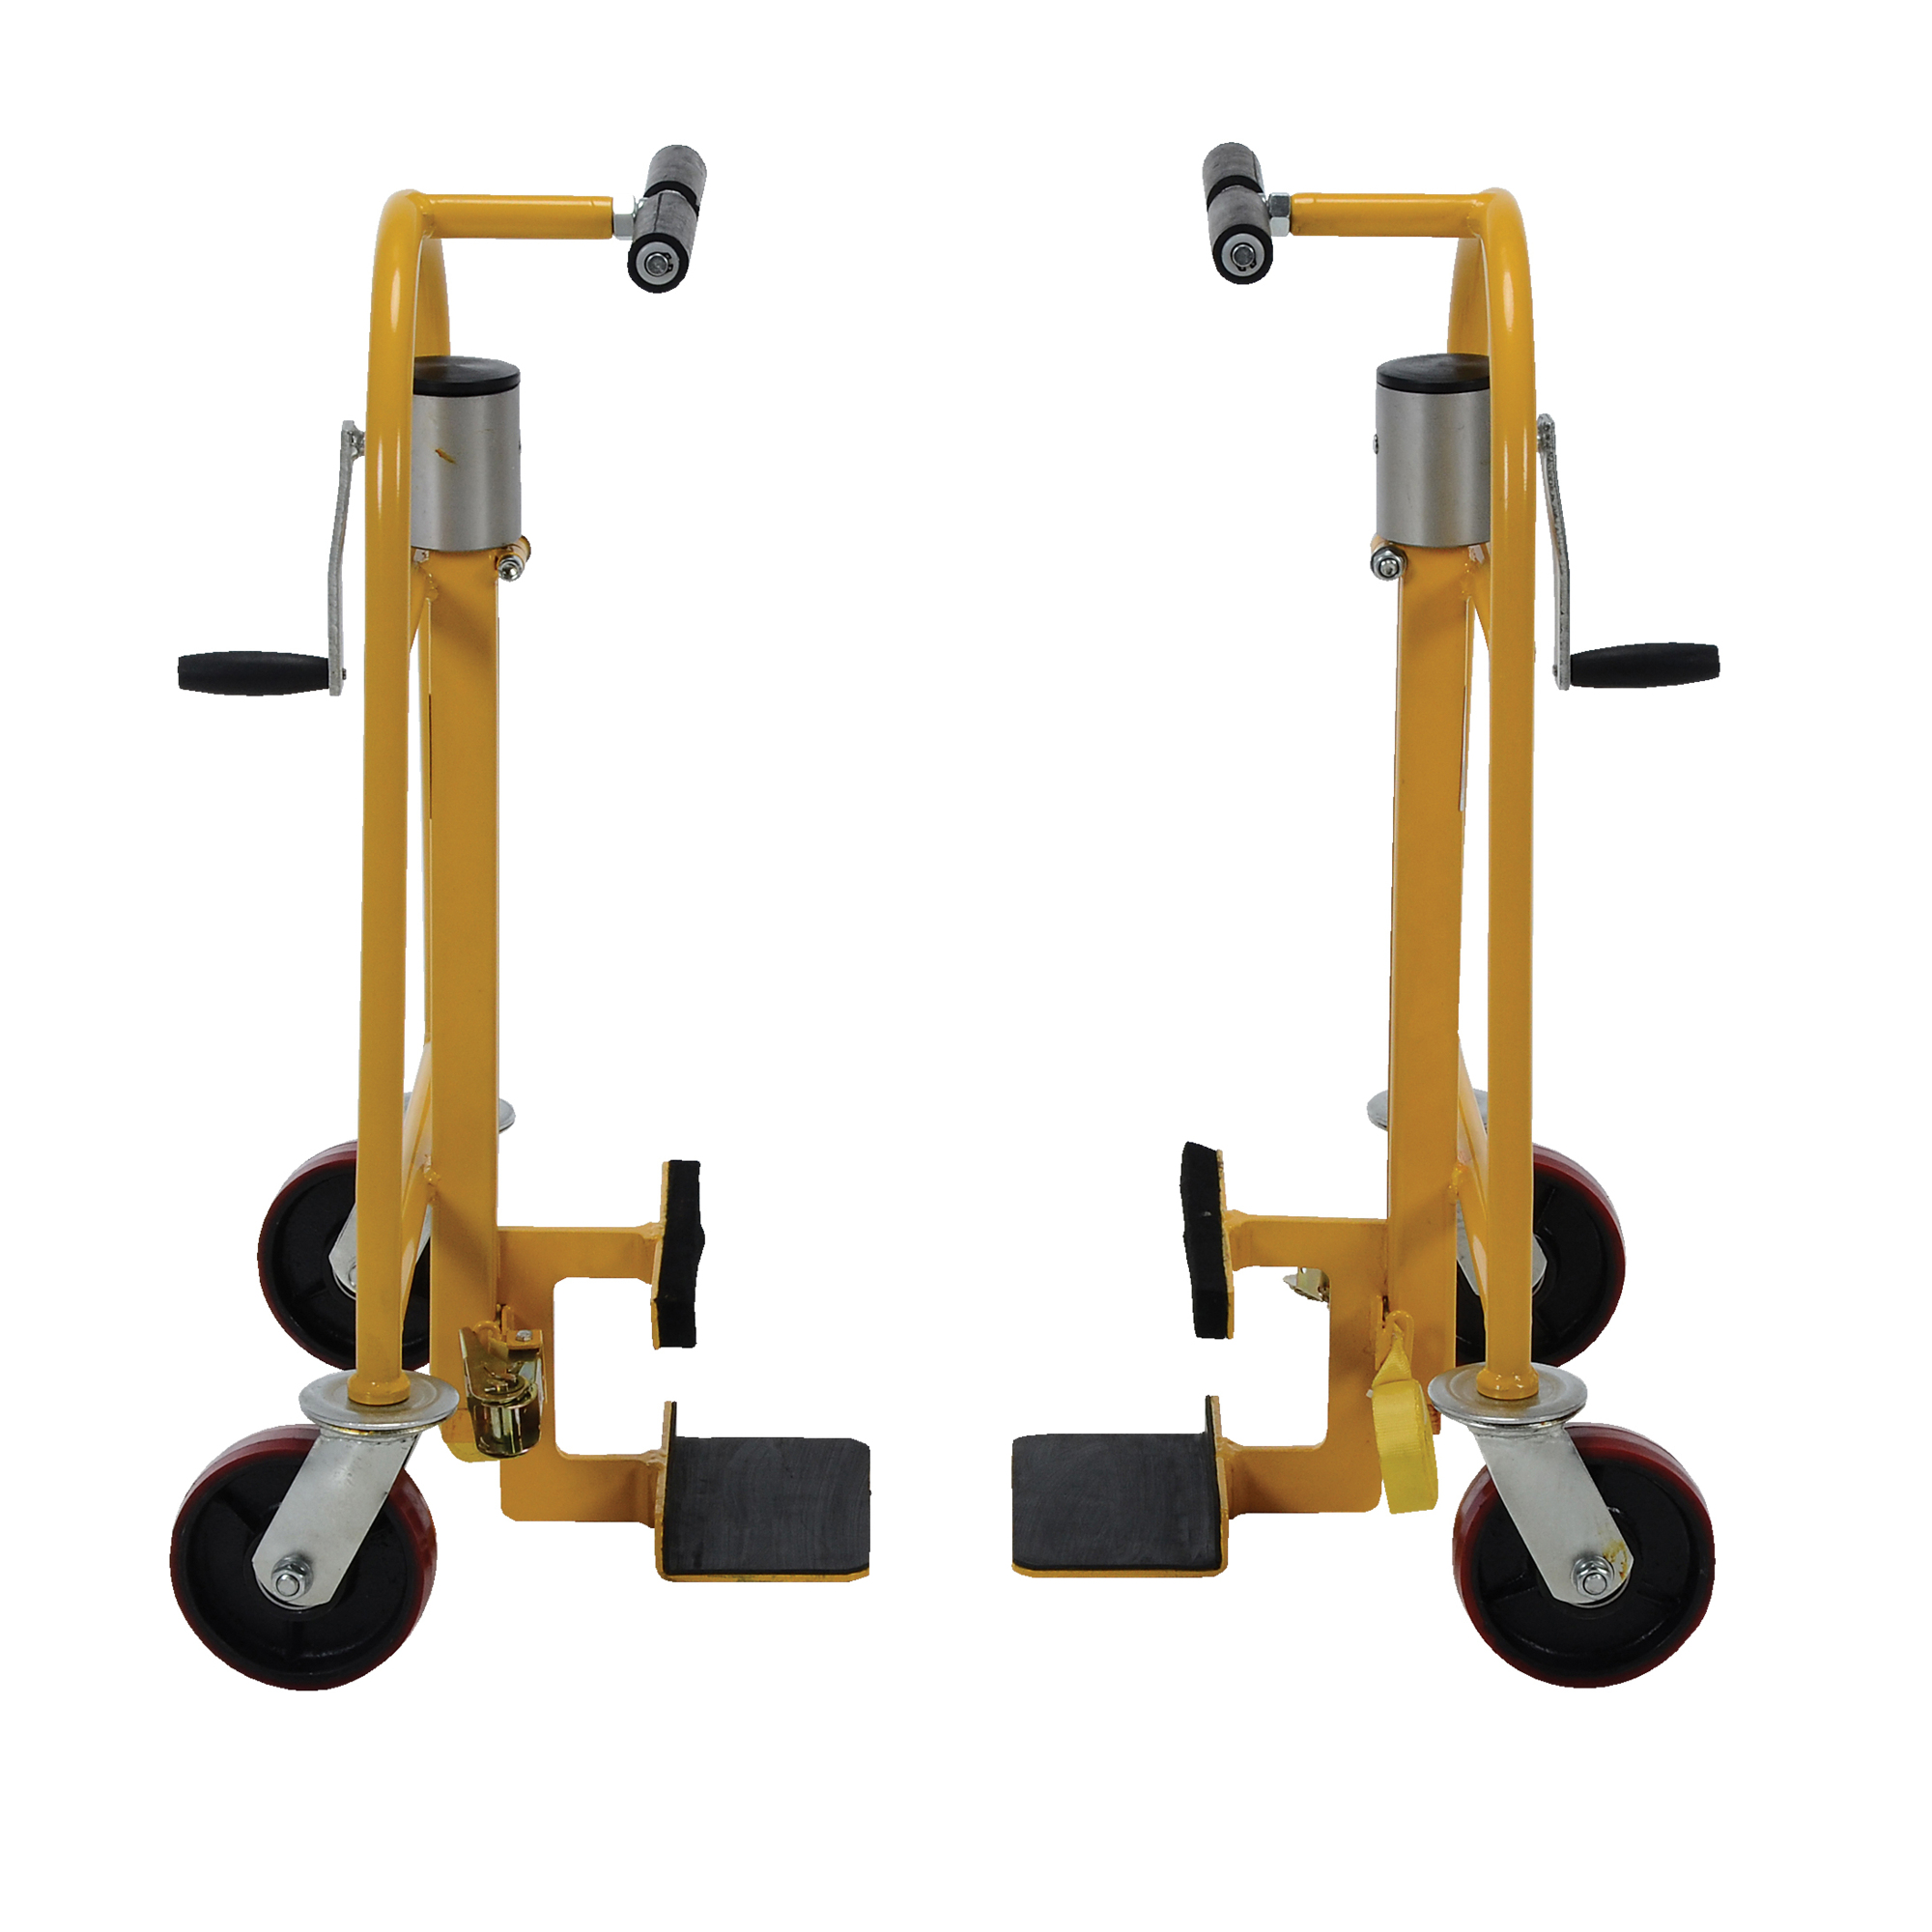 300-lb Moving Heavy Objects, Mover, Universal Wheel Load Capacity